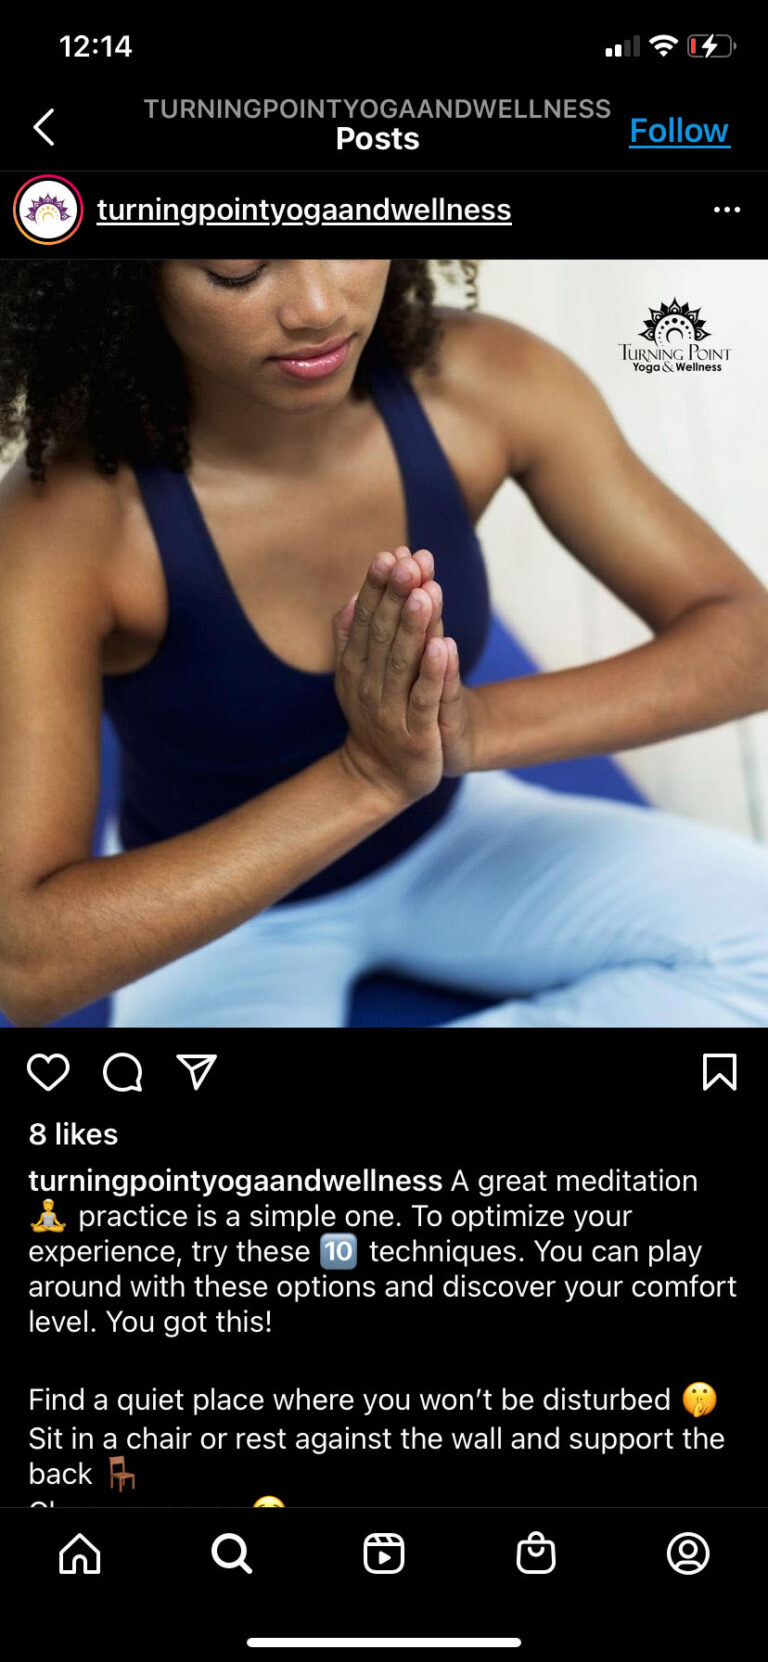 Yoga Studio 10 Techniques for Meditation Post